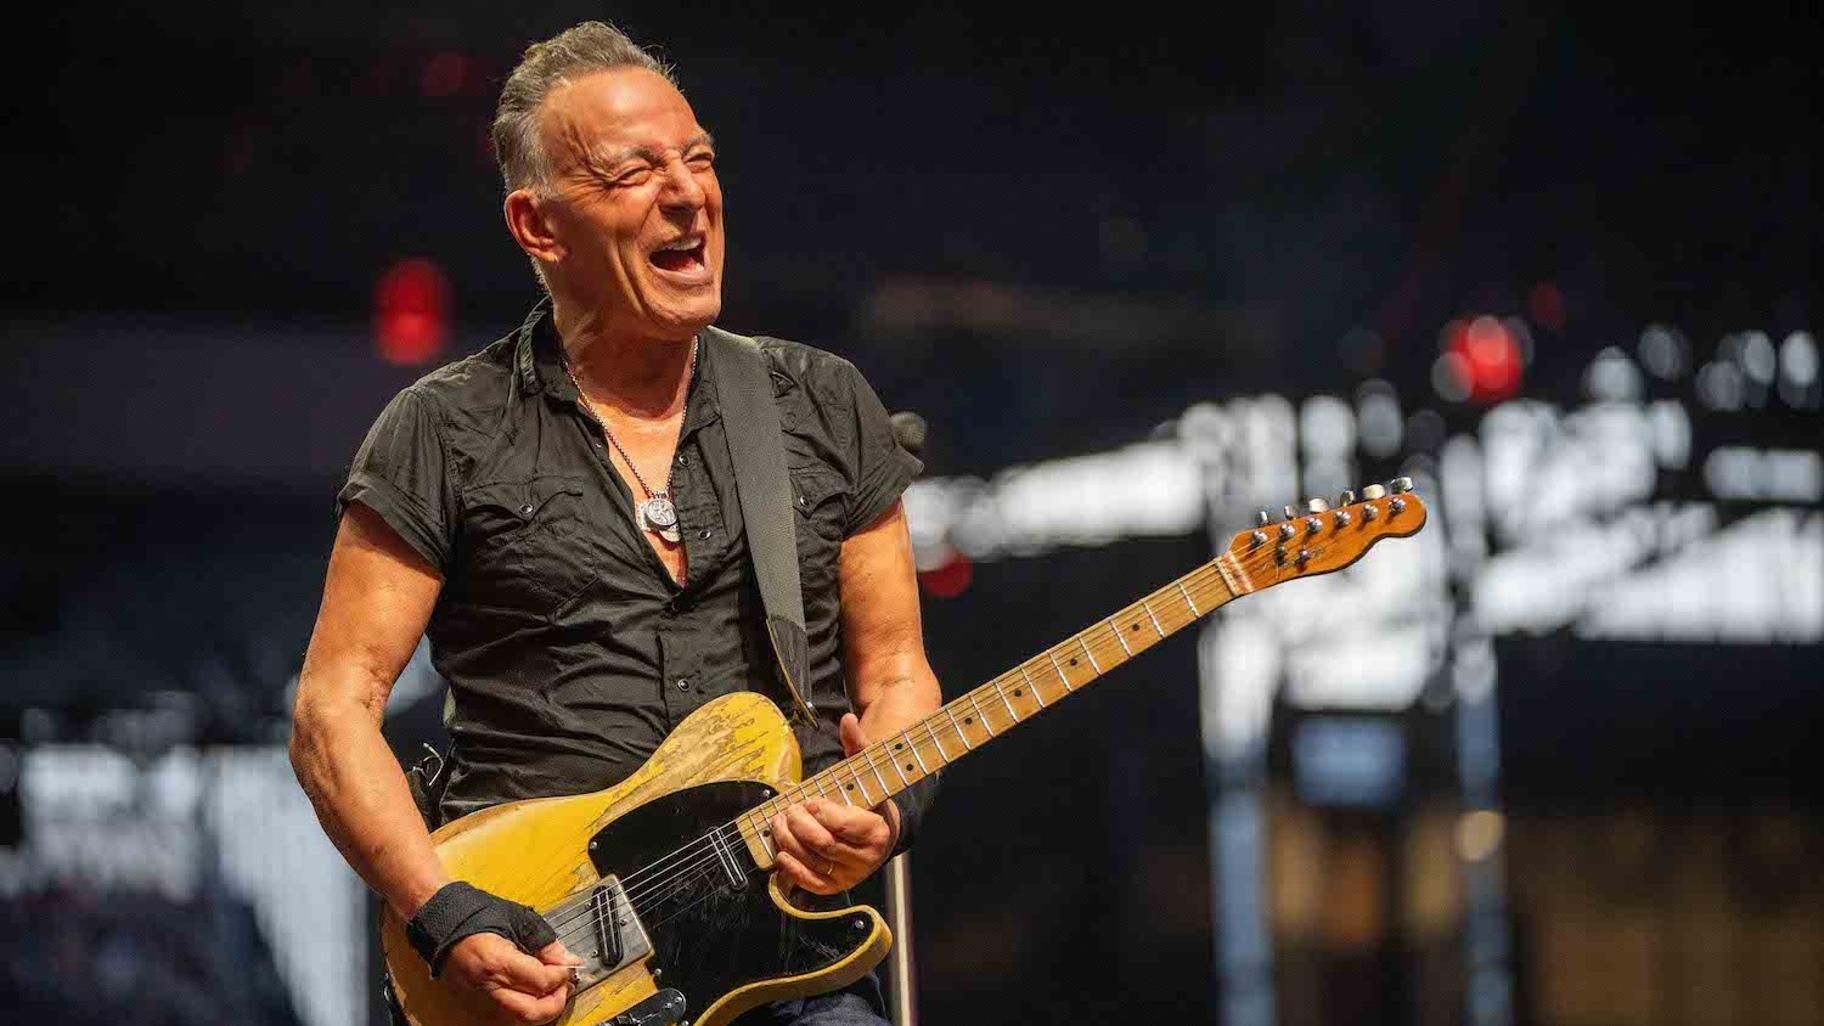 ÚLTIMA HORA: Fallece repentinamente Bruce Springsteen